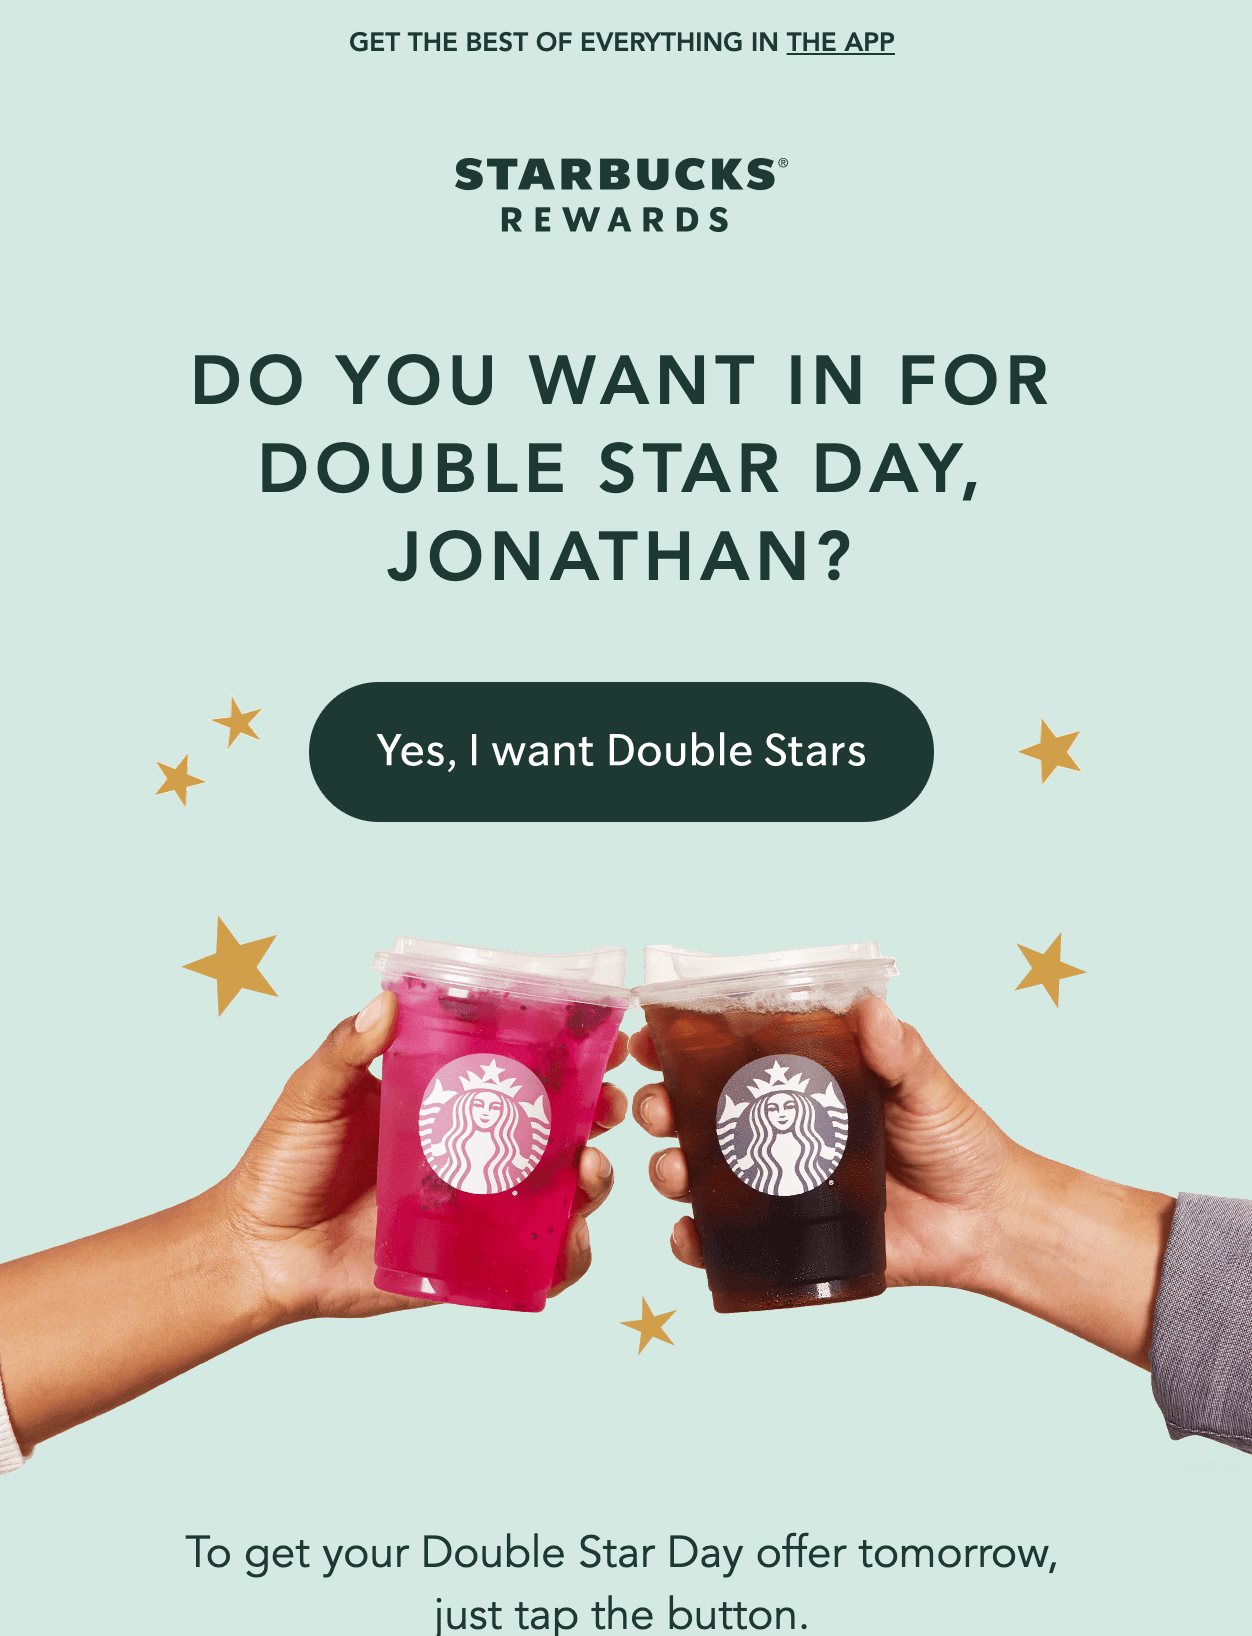 Starbucks Rewards example with two starbucks drinks 